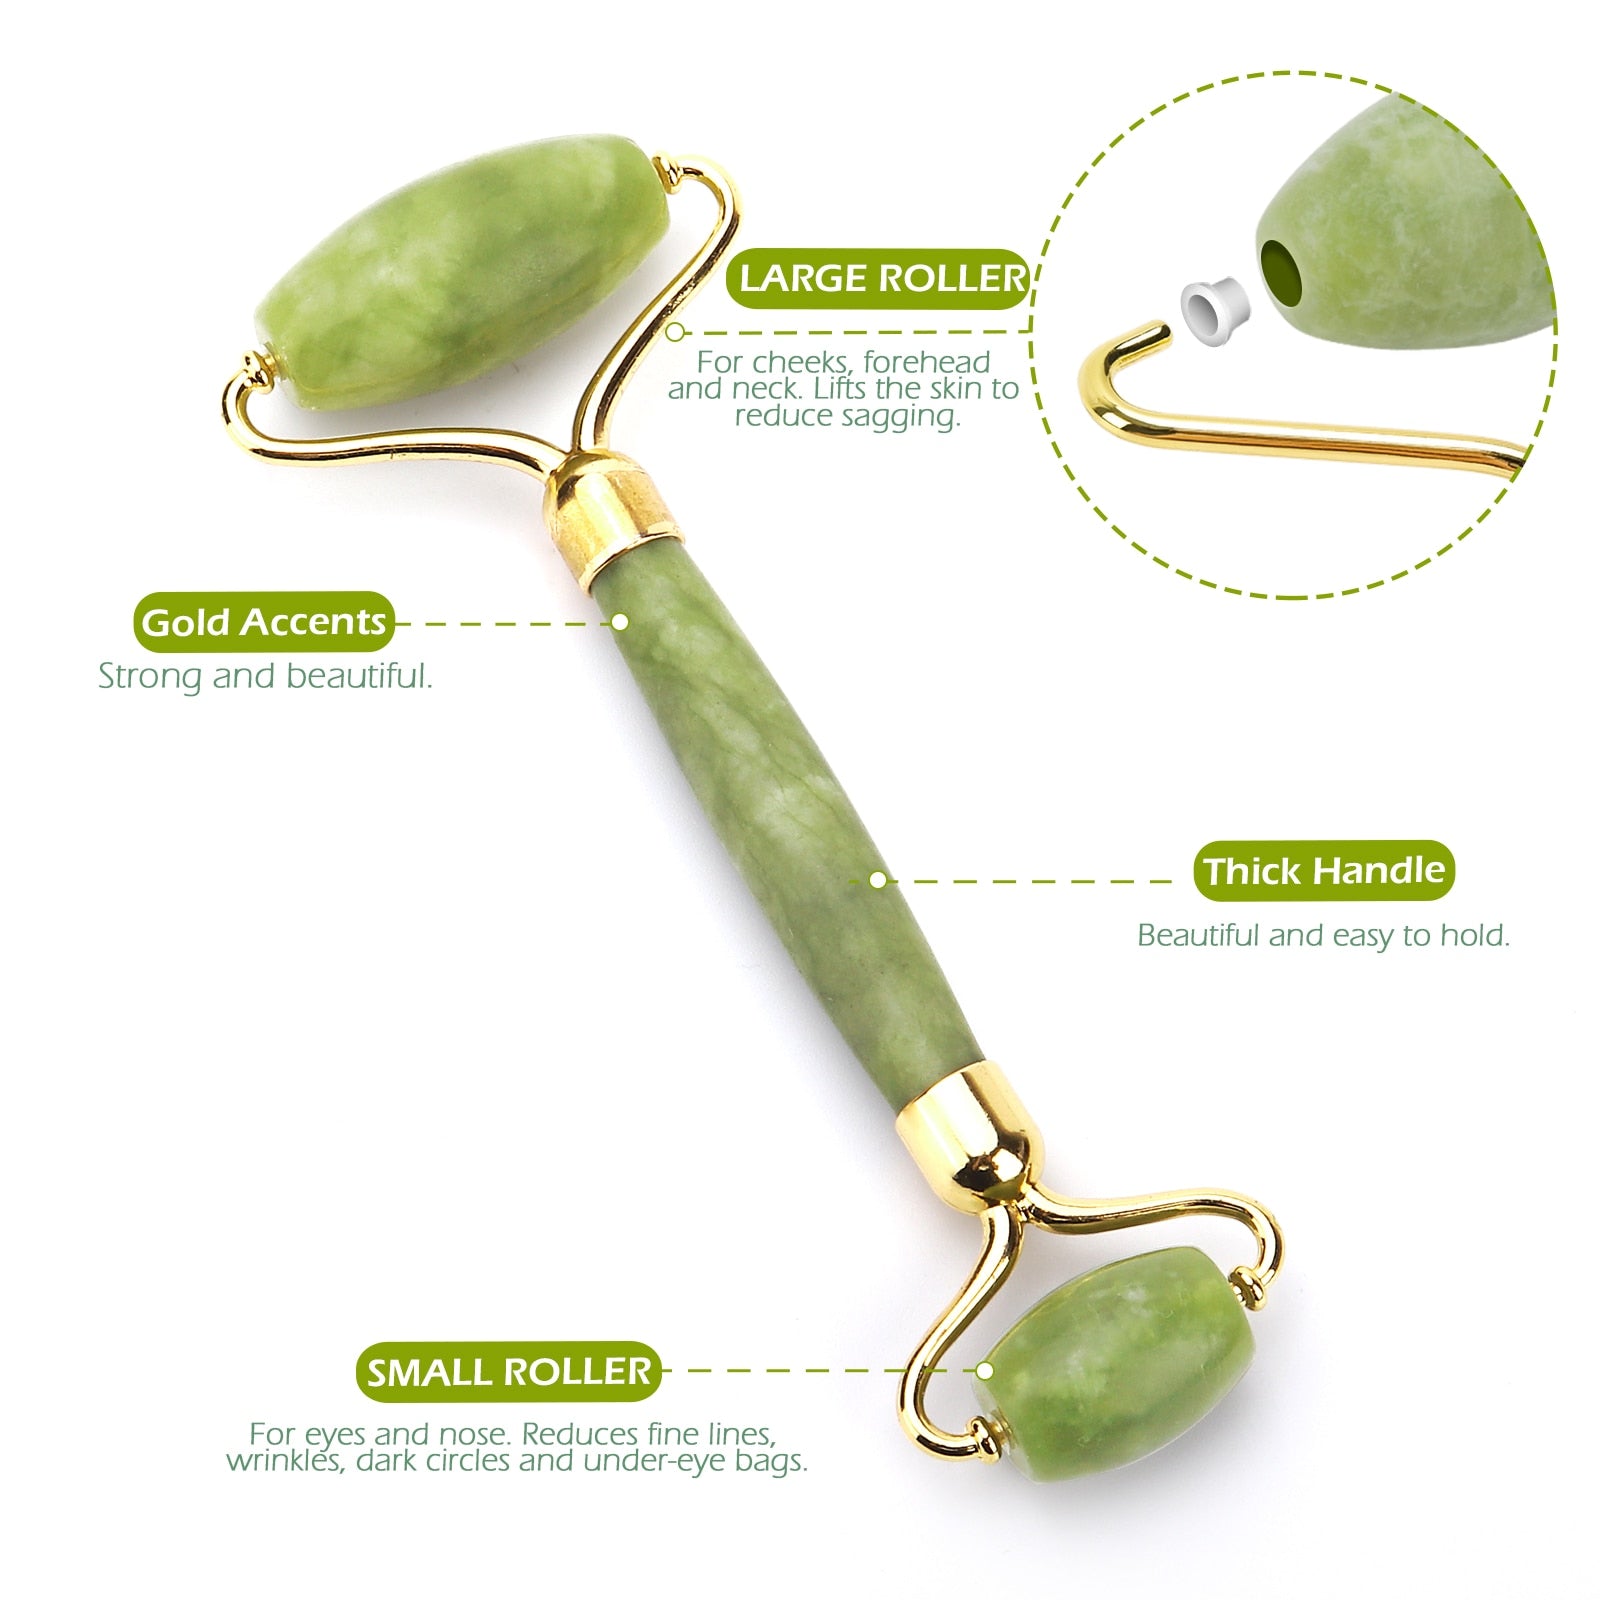 Natural Jade Roller - healthbesidesfit